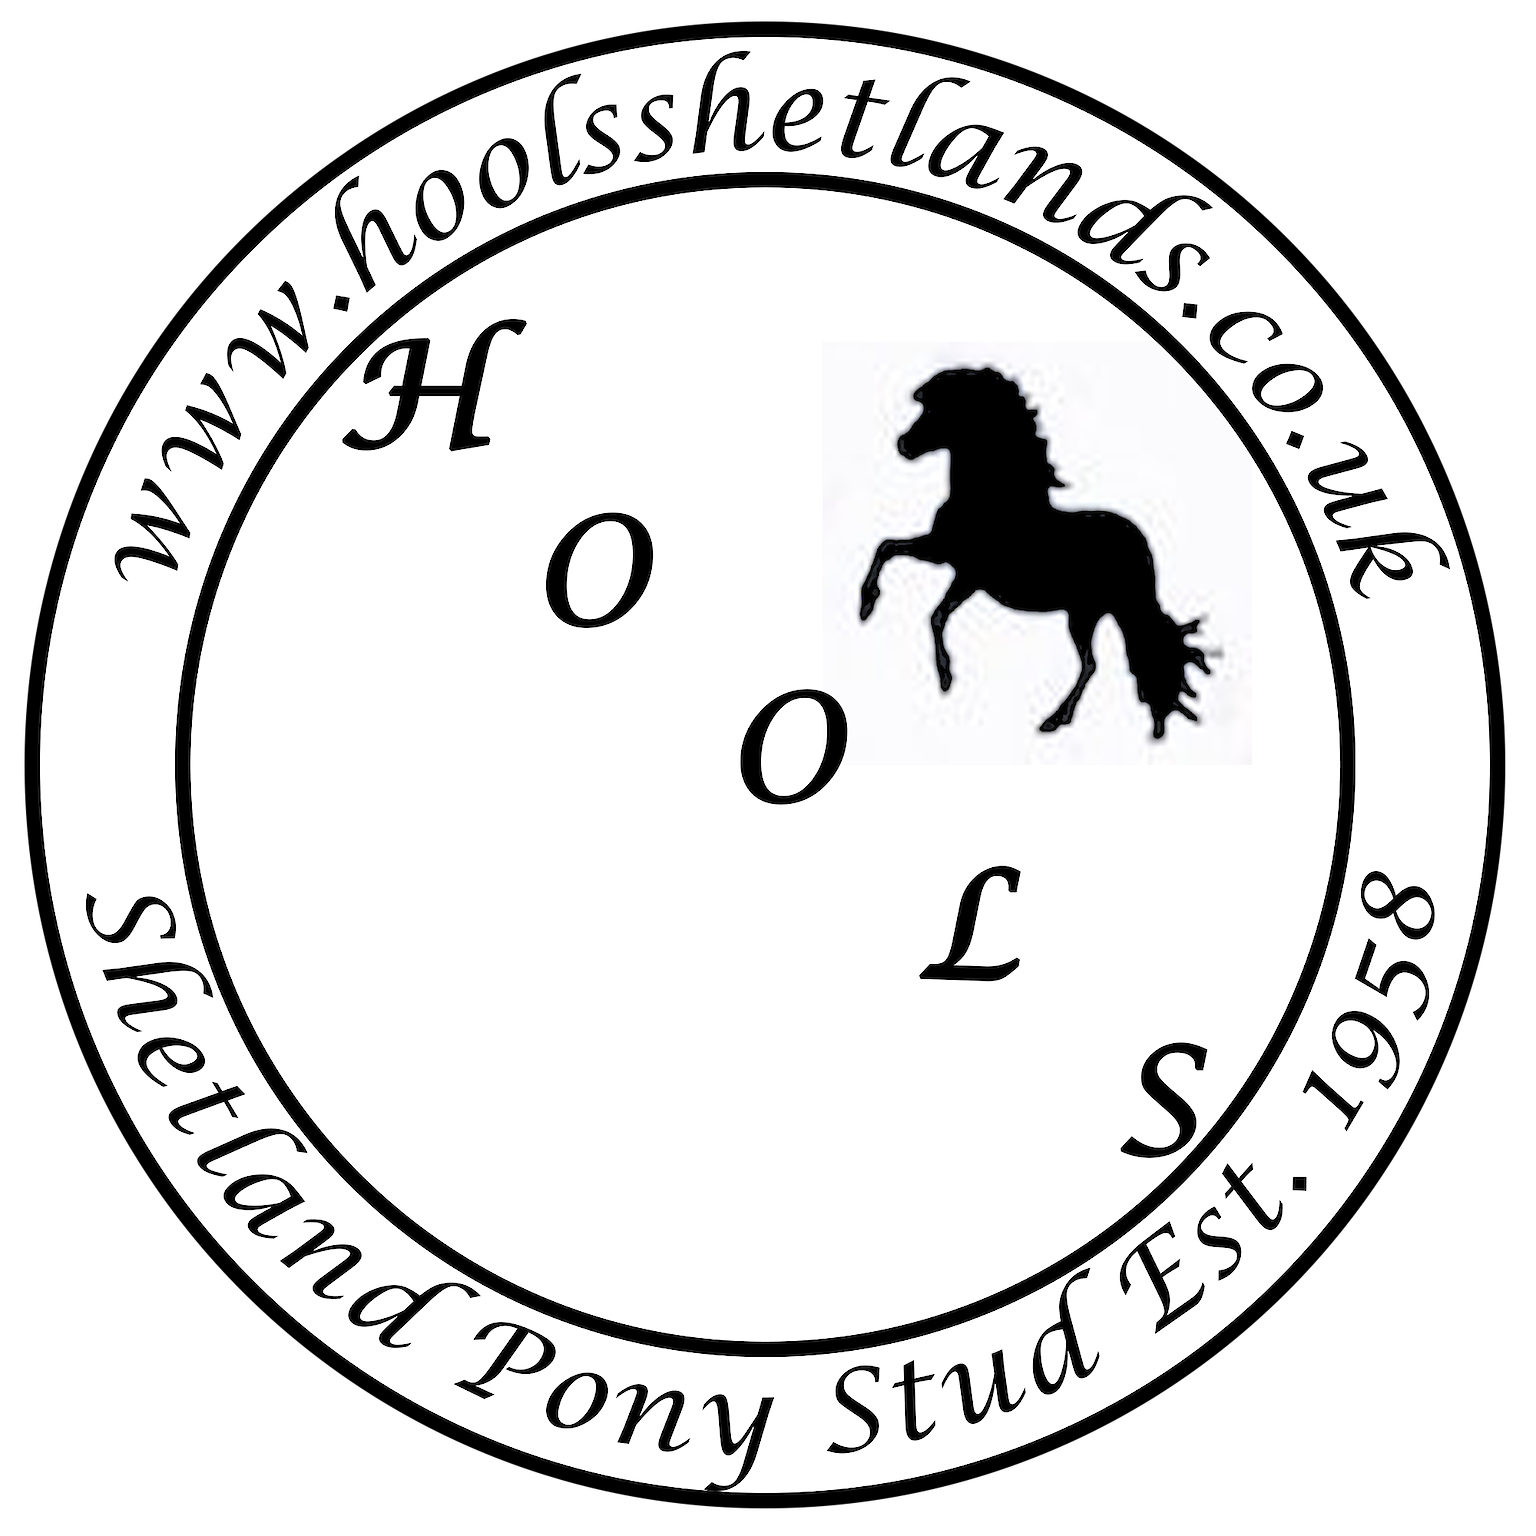 Hools Shetland Pony Stud Logo